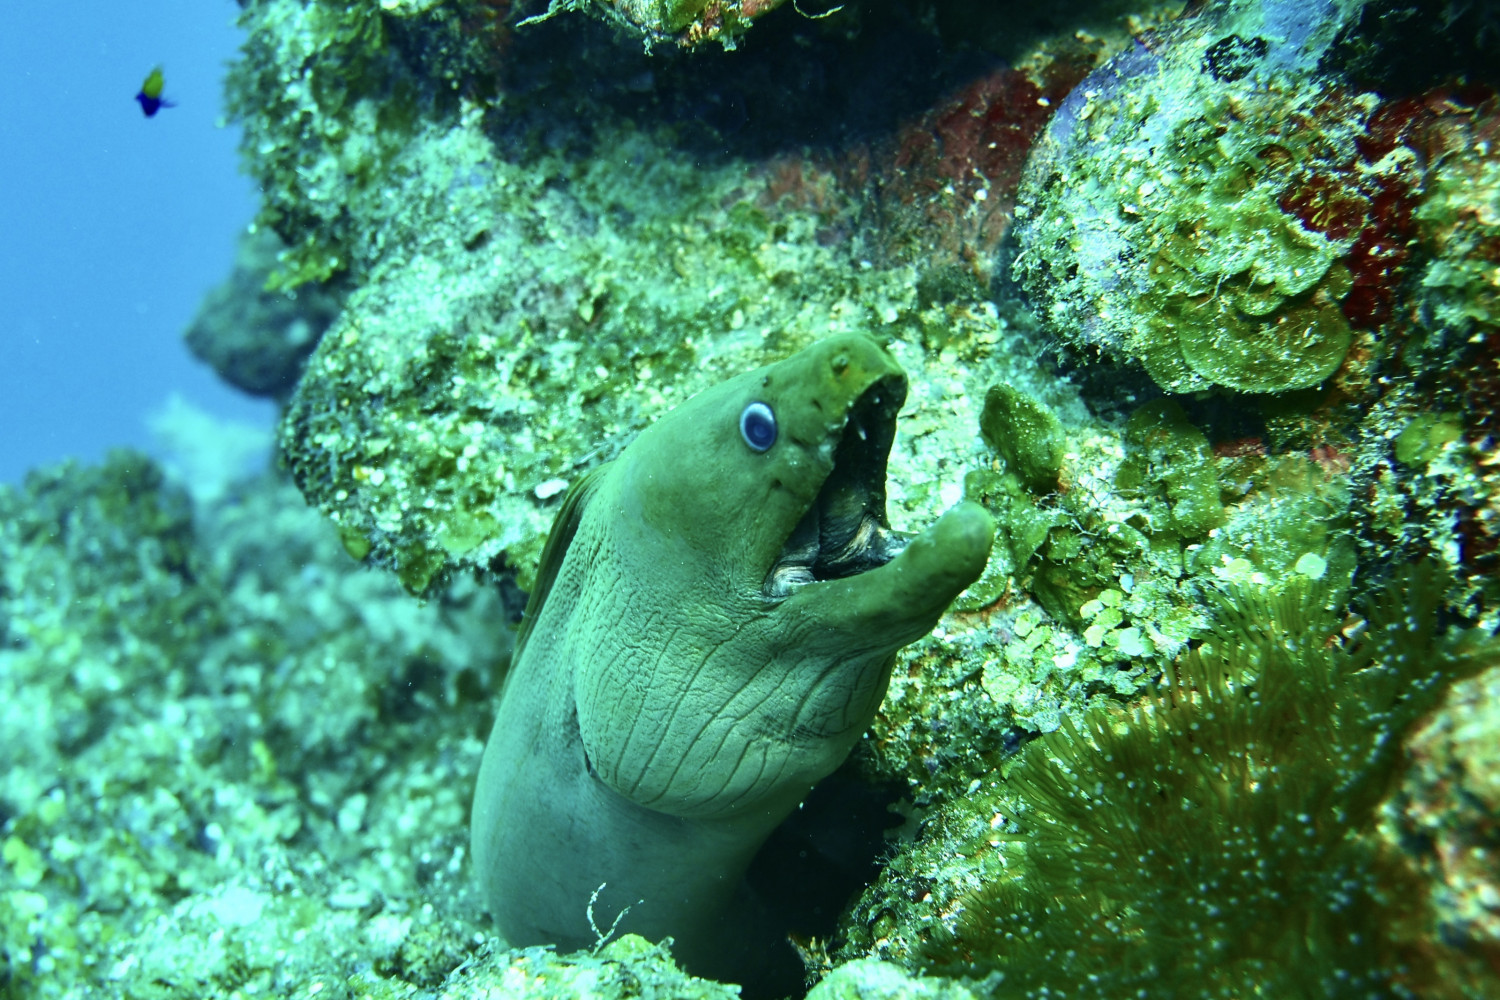 An eel found while scuba diving.